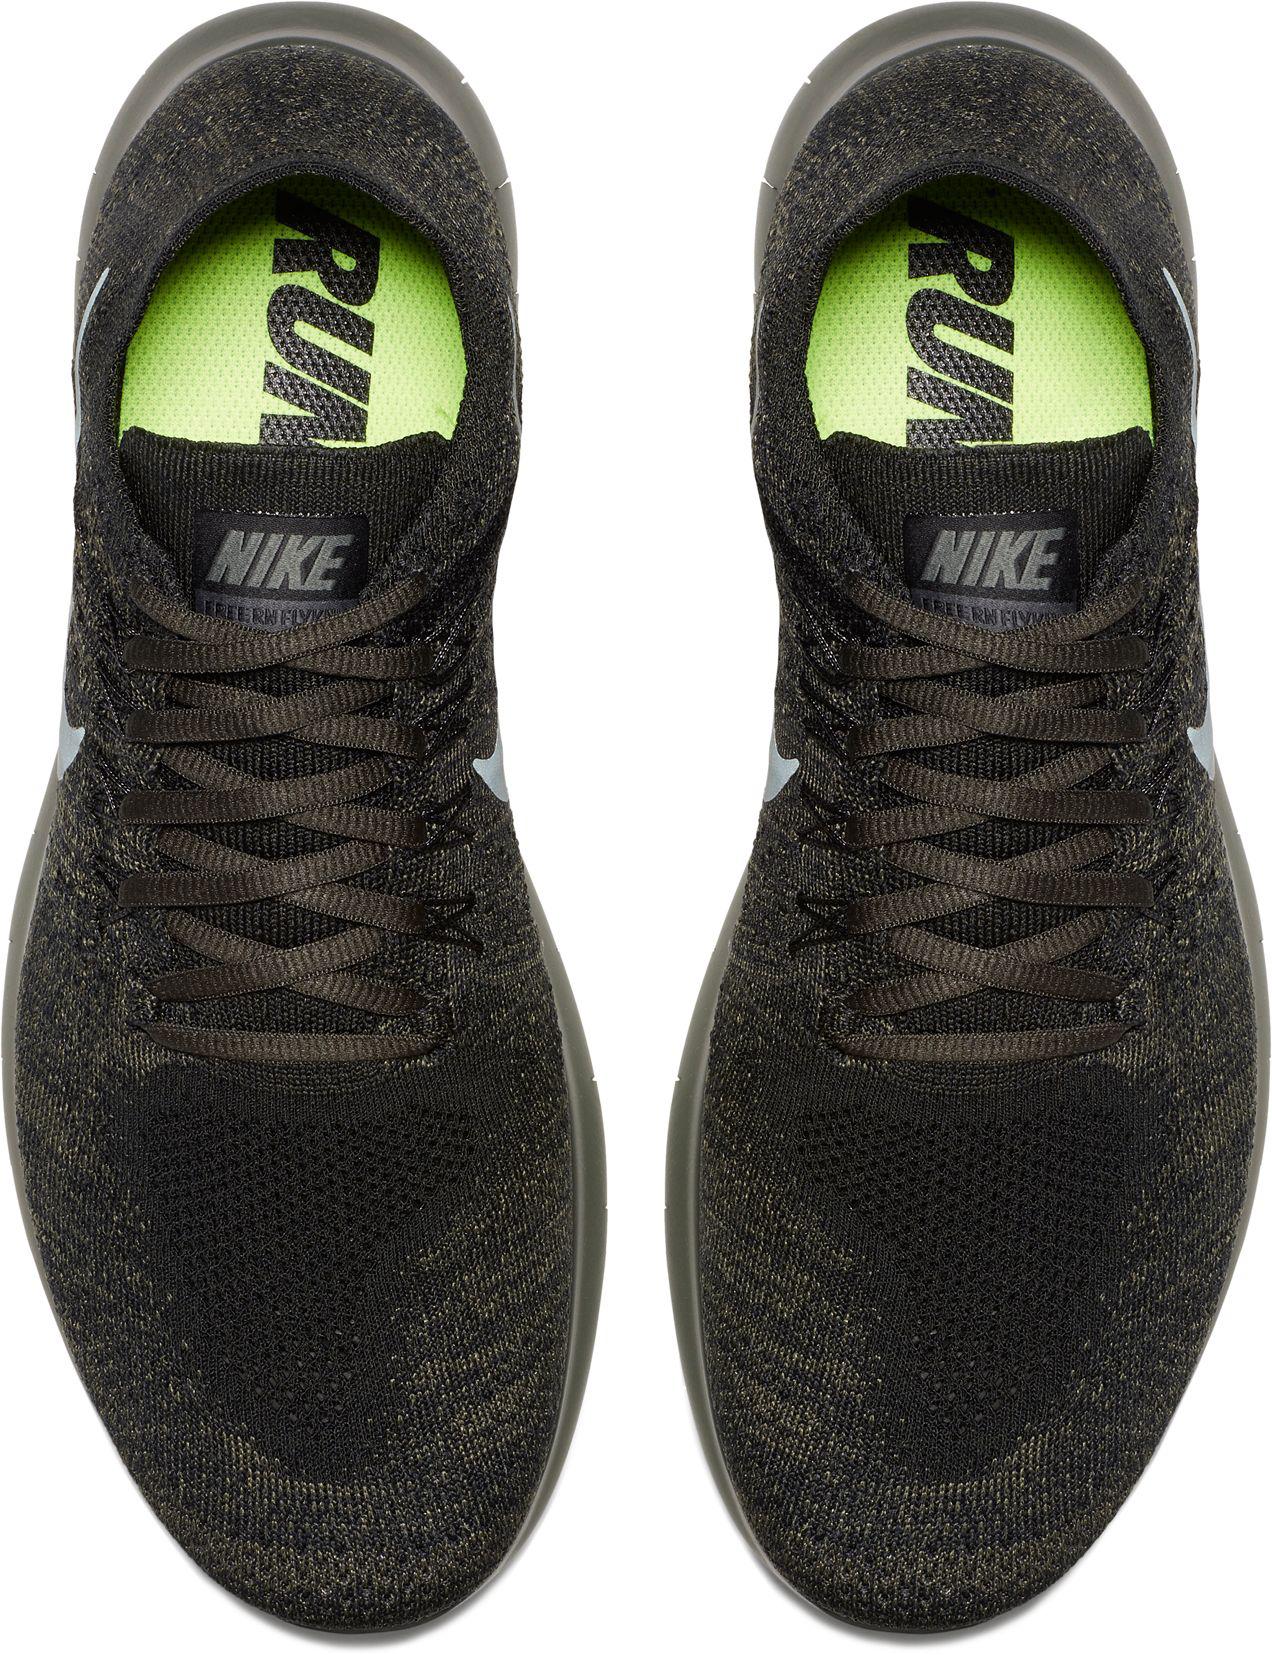 Nike Free Rn Flyknit 2017 Running Shoes in Black for Men - Lyst